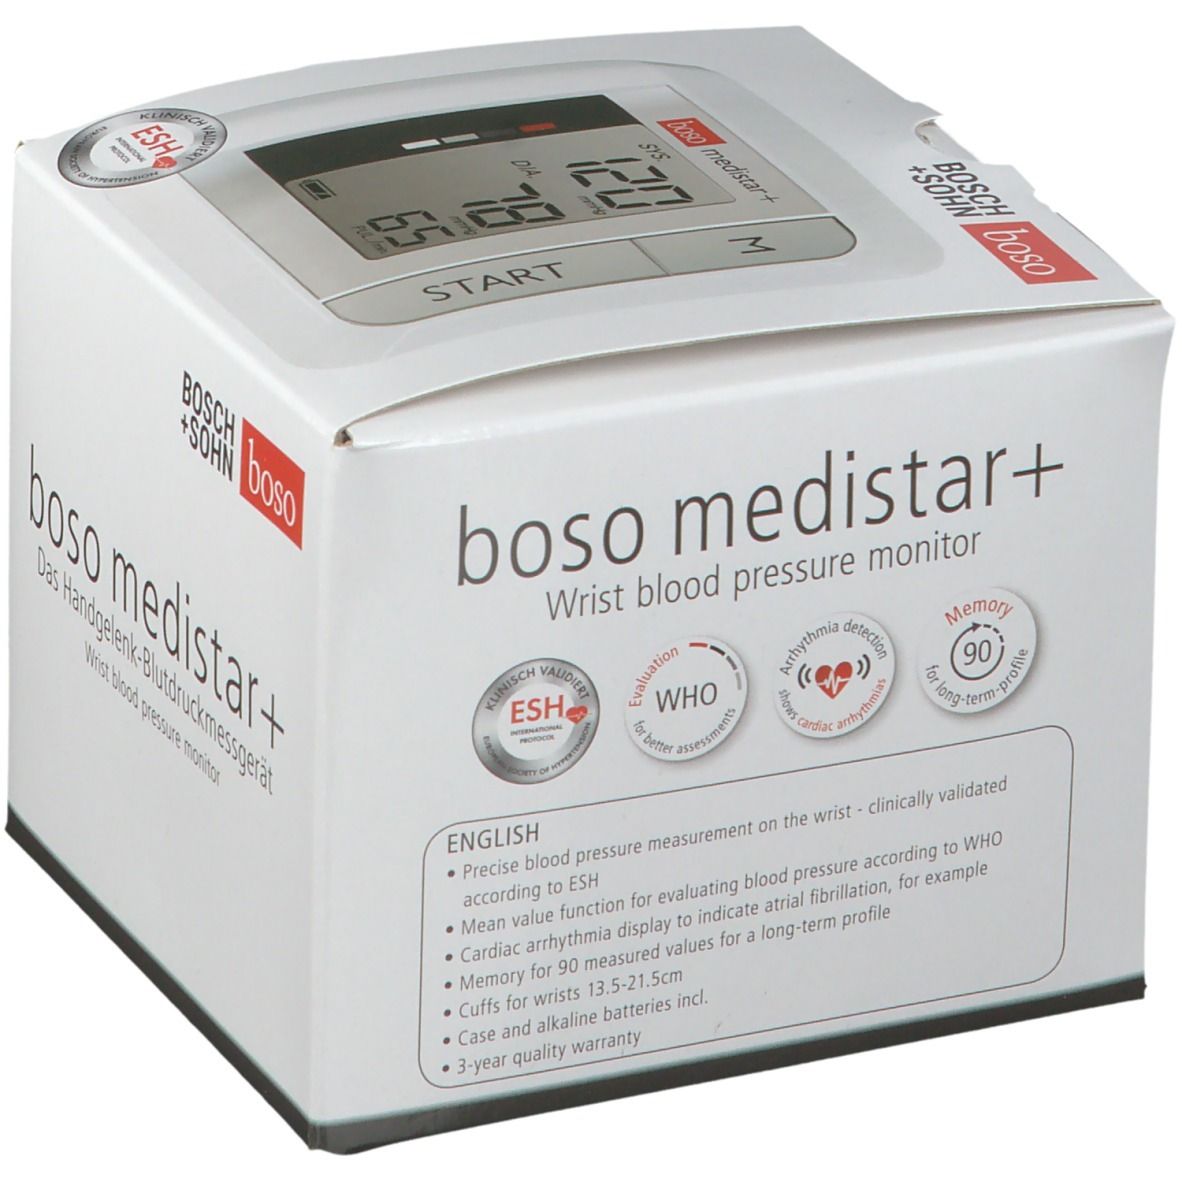 Boso Medistar plus